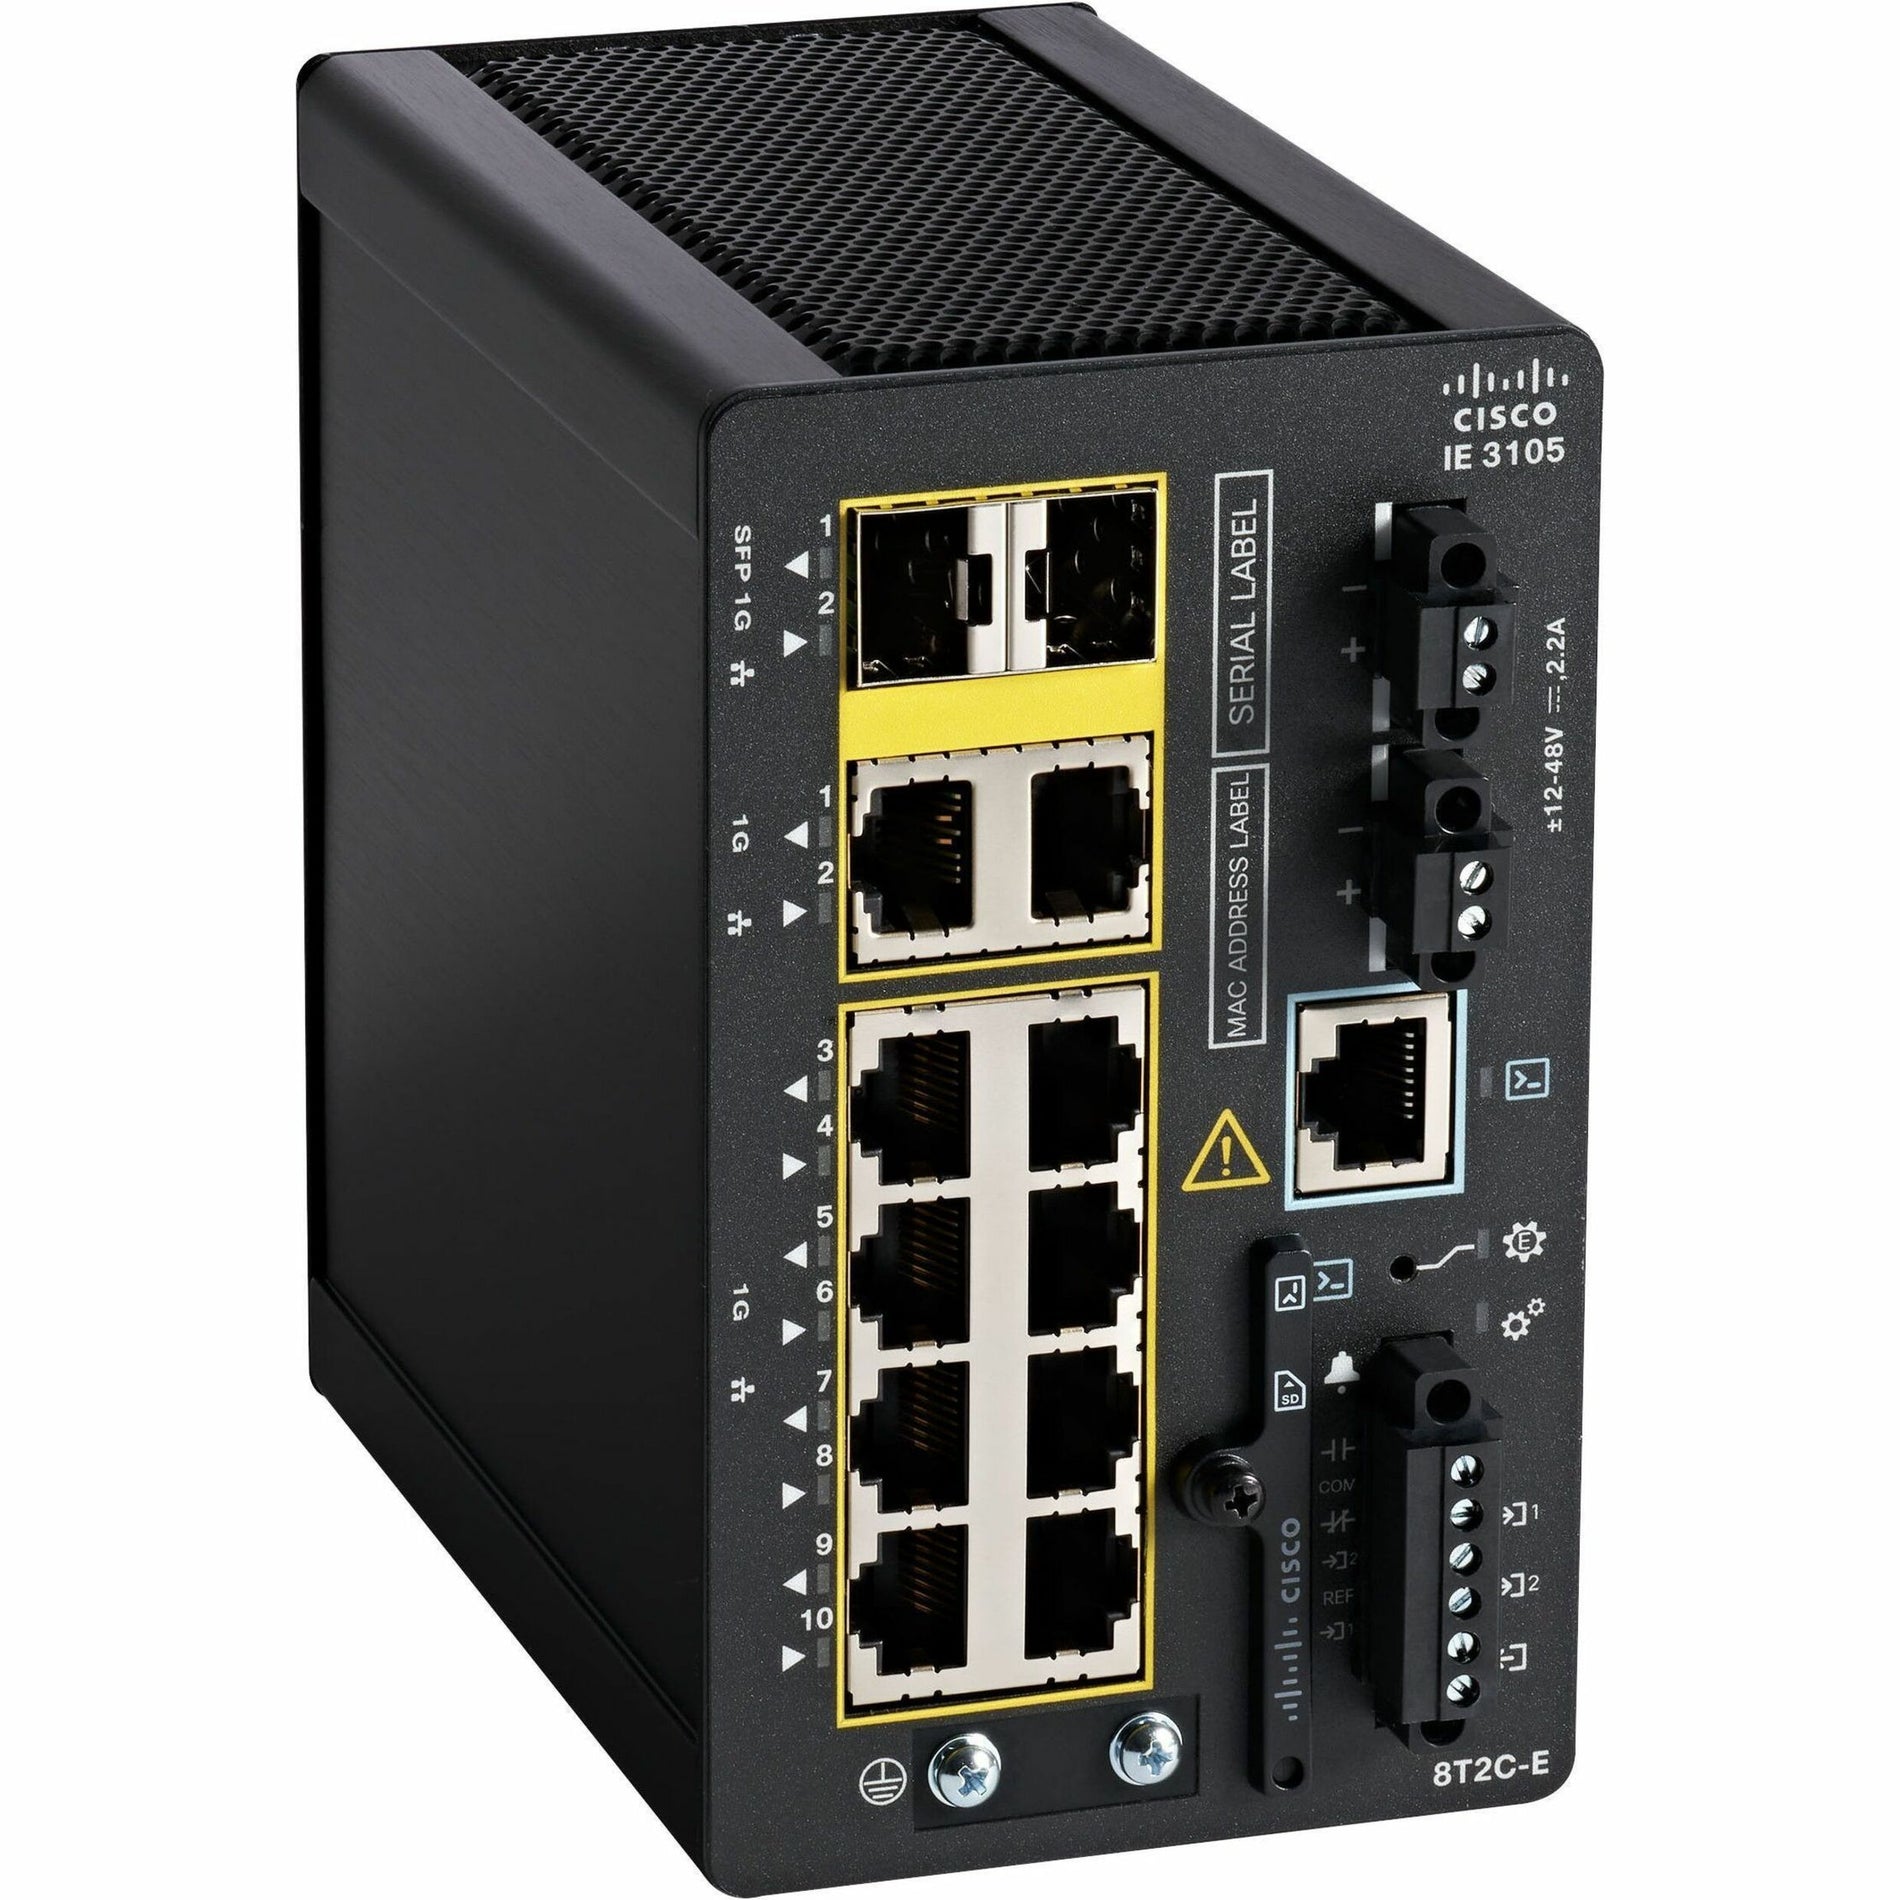 Cisco IE-3105-8T2C-E Catalyst IE3100 Rugged Ethernet Switch, 10 Gigabit Ethernet Network, 2 x Gigabit Ethernet Combo Uplink, DIN Rail Mountable